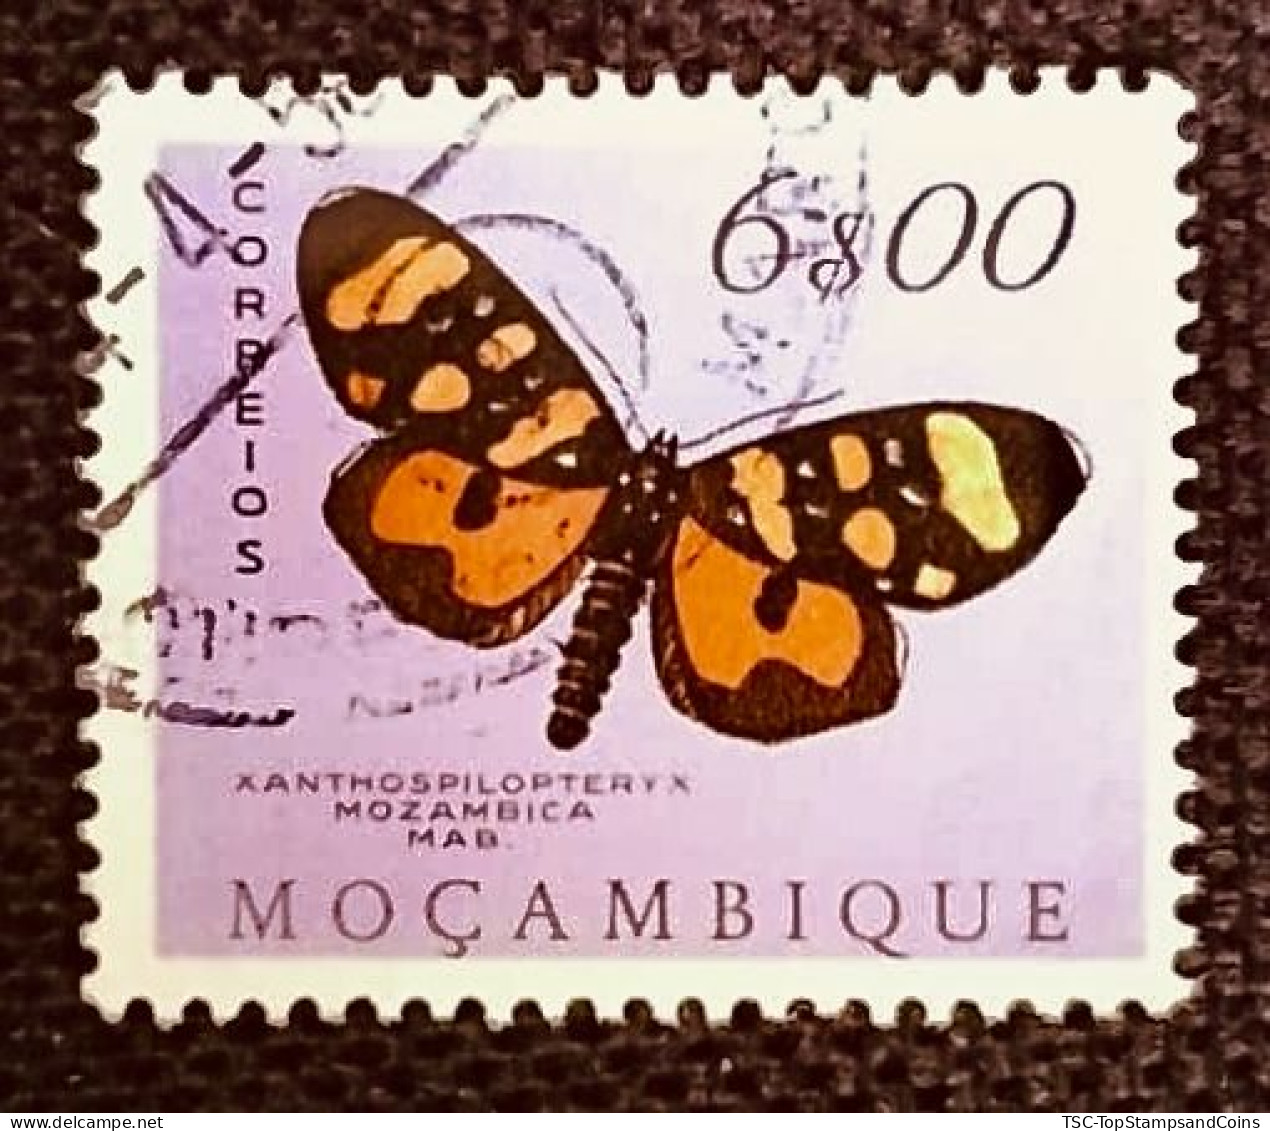 MOZPO0404U5 - Mozambique Butterflies - 6$00 Used Stamp - Mozambique - 1953 - Mozambique